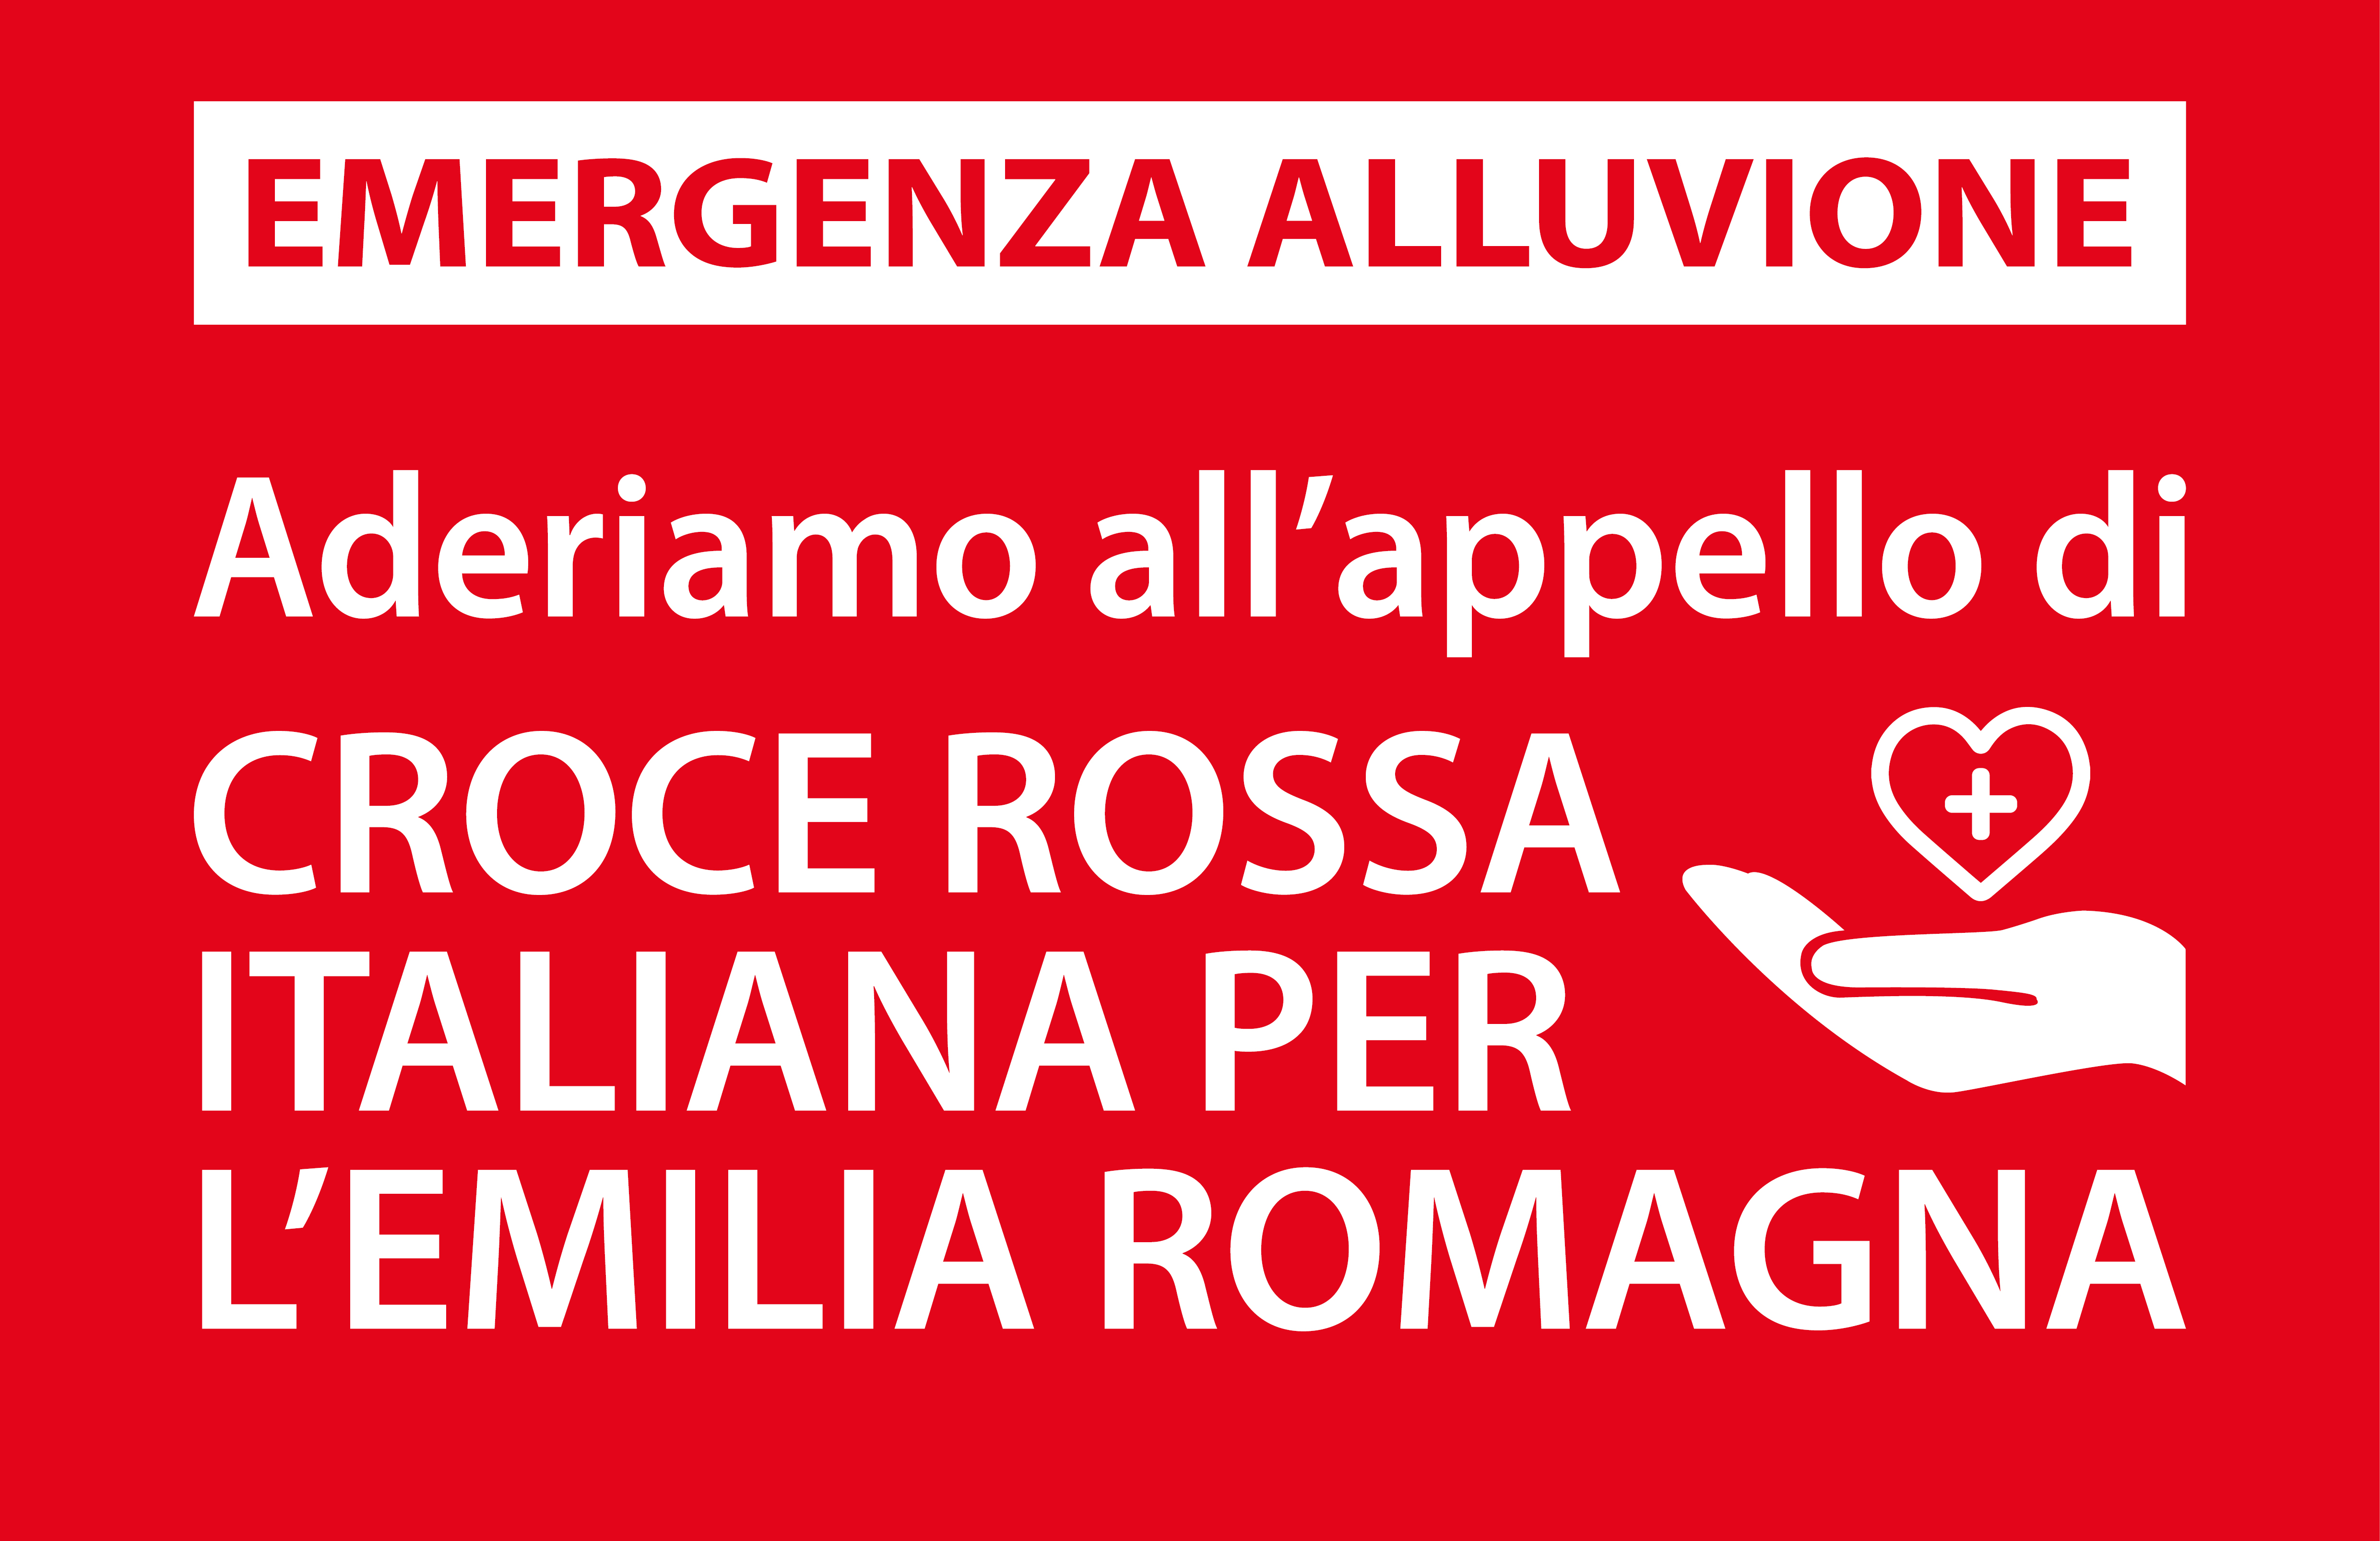 Raccolta fondi per l'alluvione in Emilia Romagna